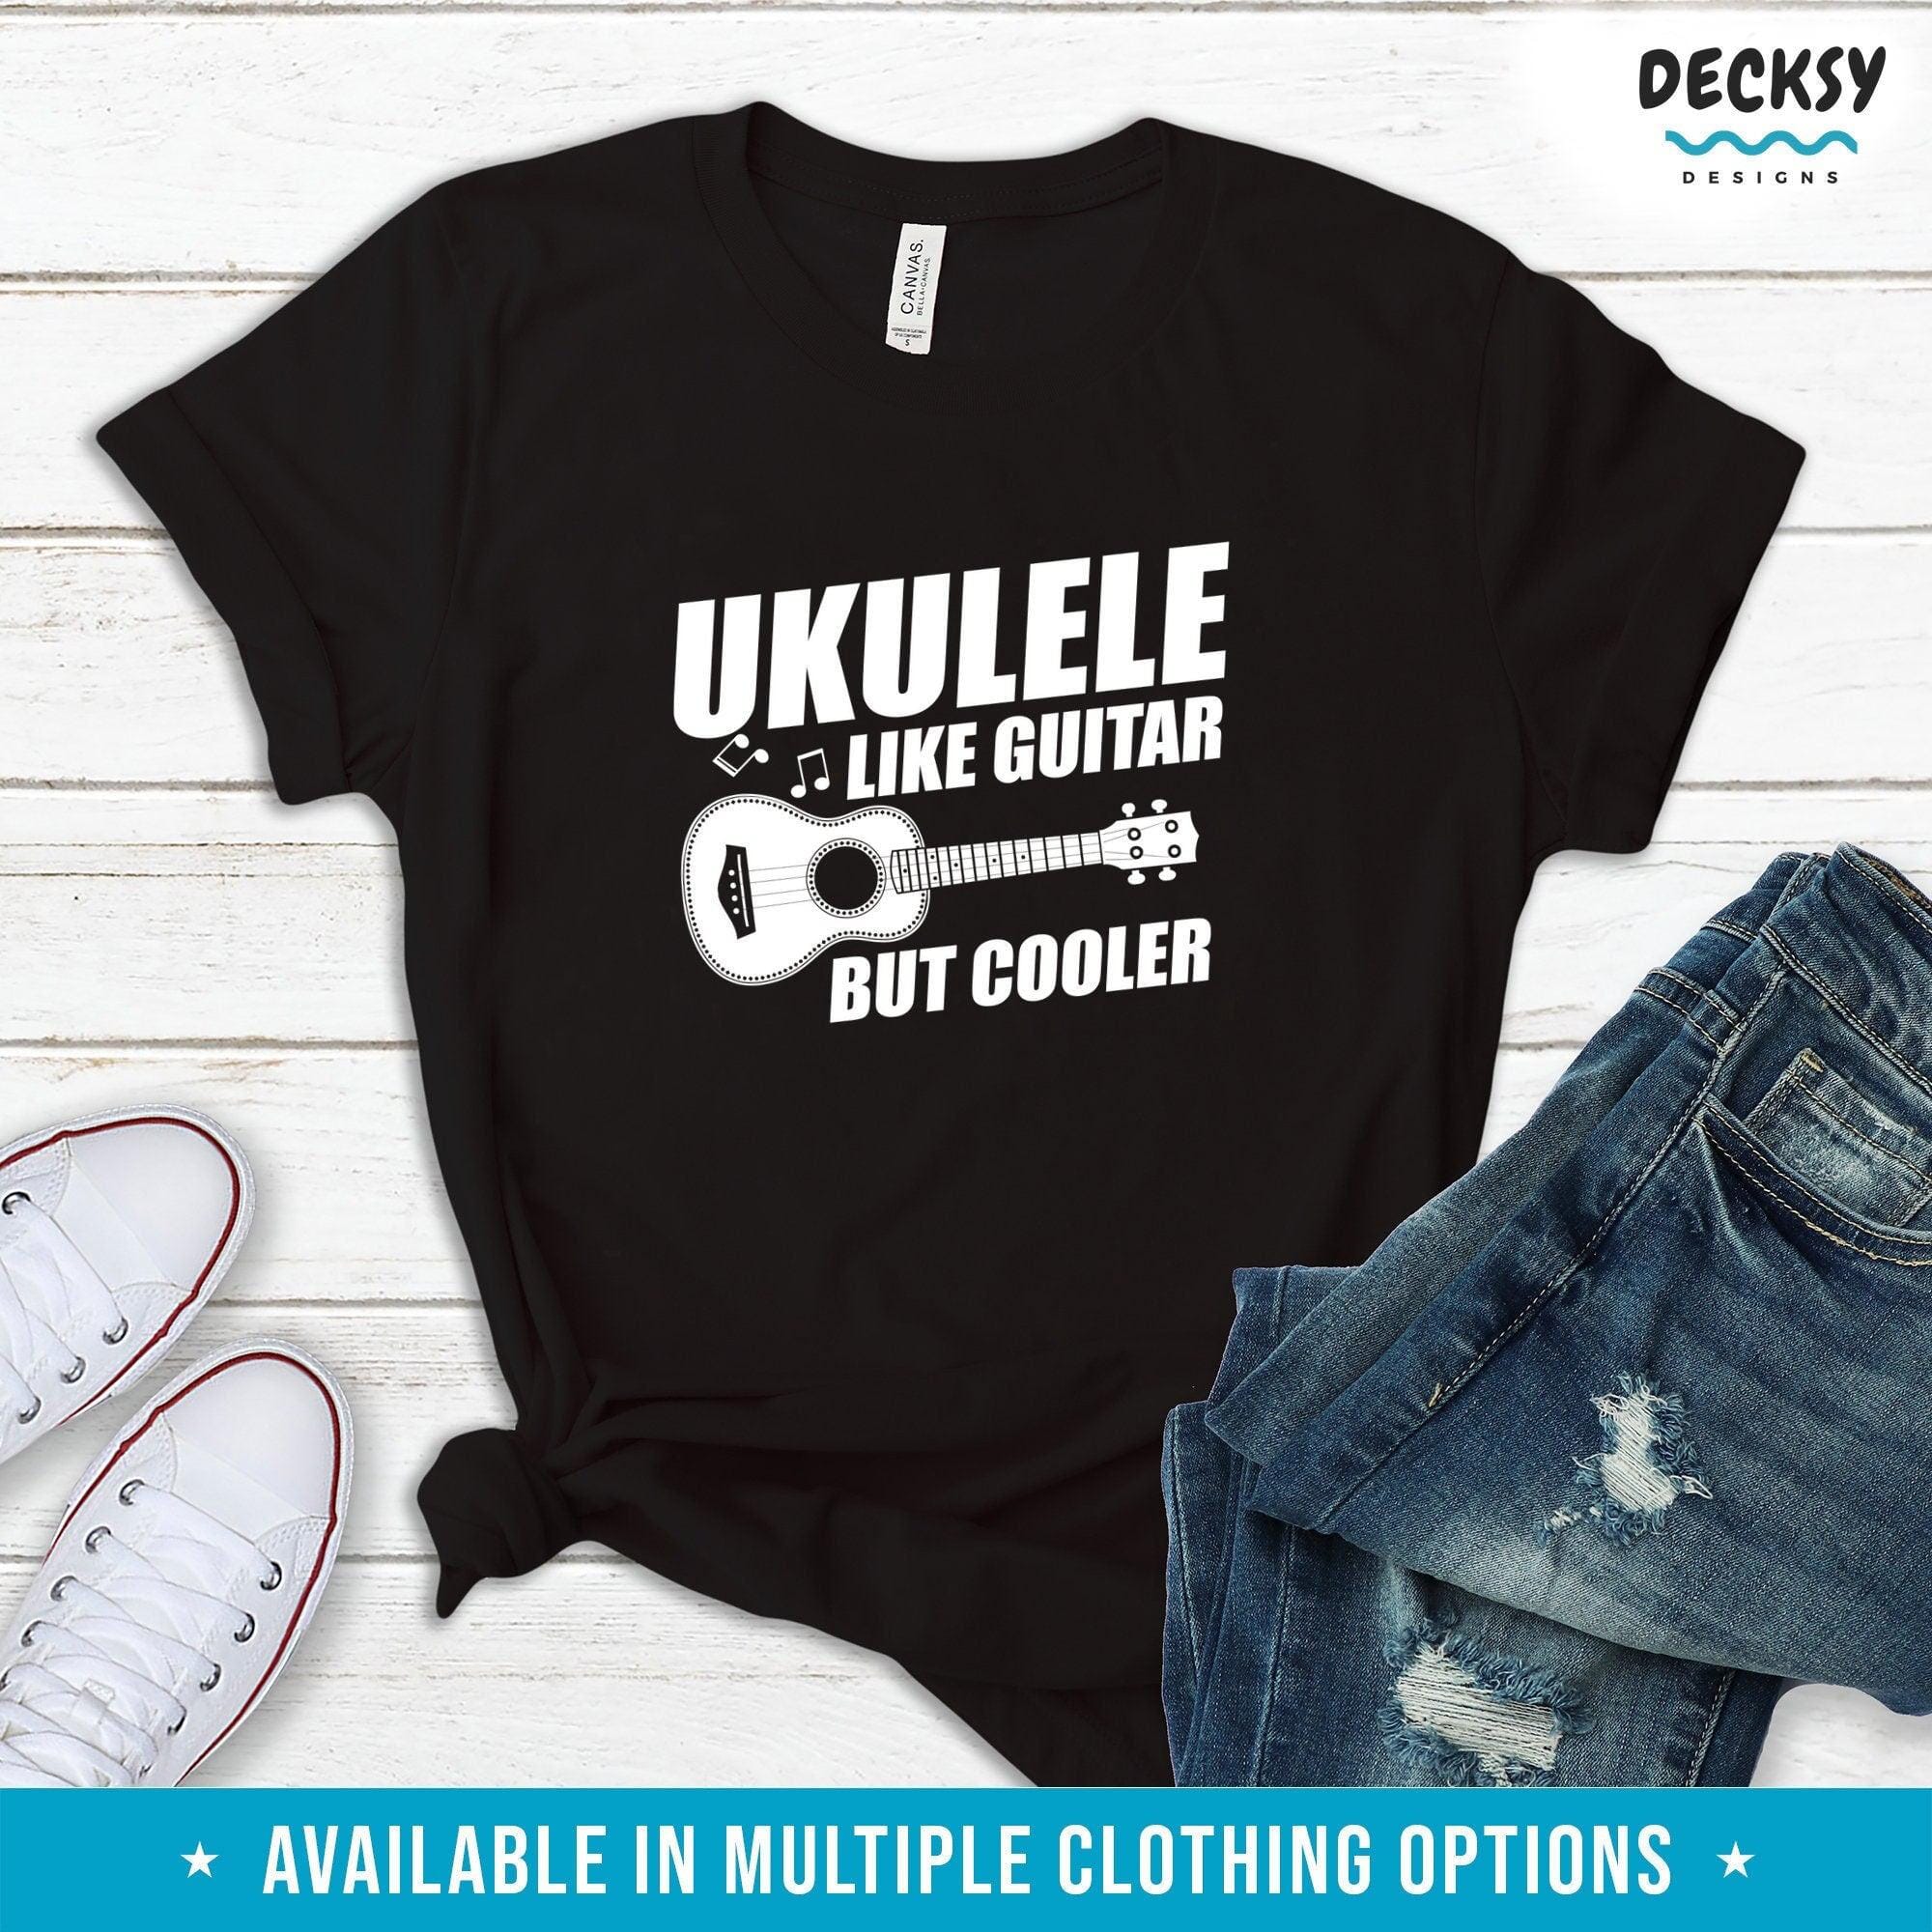 Funny Ukulele Tshirt, Ukulele Player Gift-Clothing:Gender-Neutral Adult Clothing:Tops & Tees:T-shirts:Graphic Tees-DecksyDesigns